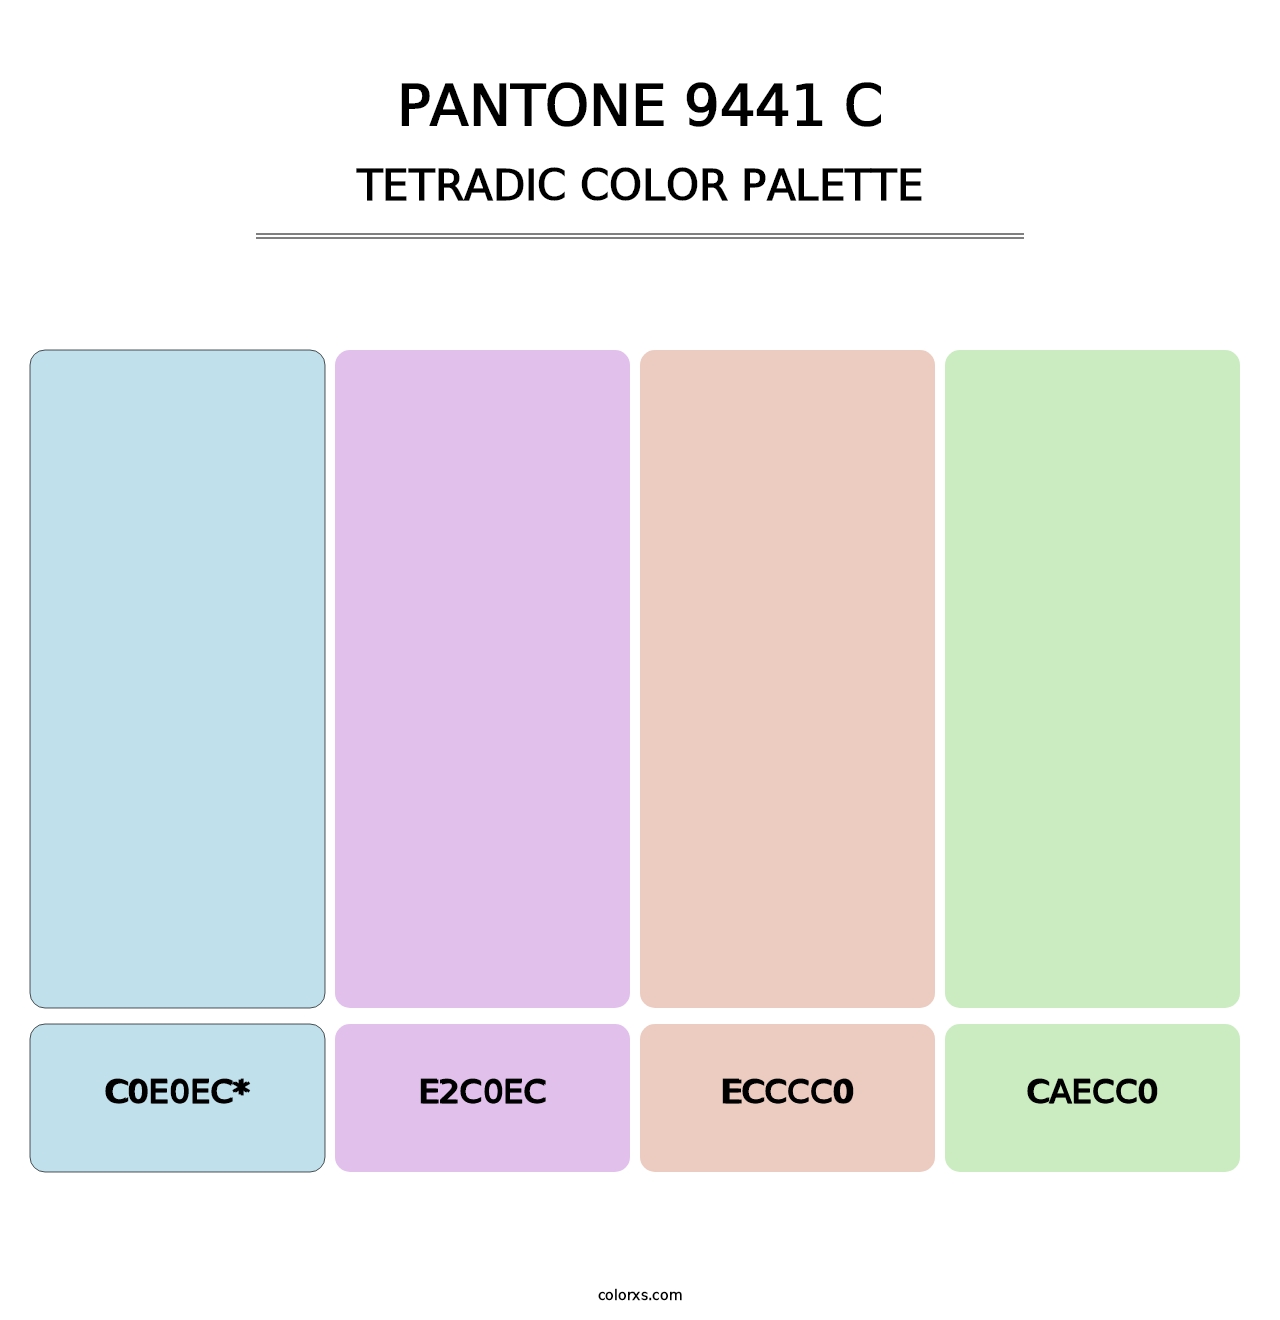 PANTONE 9441 C - Tetradic Color Palette